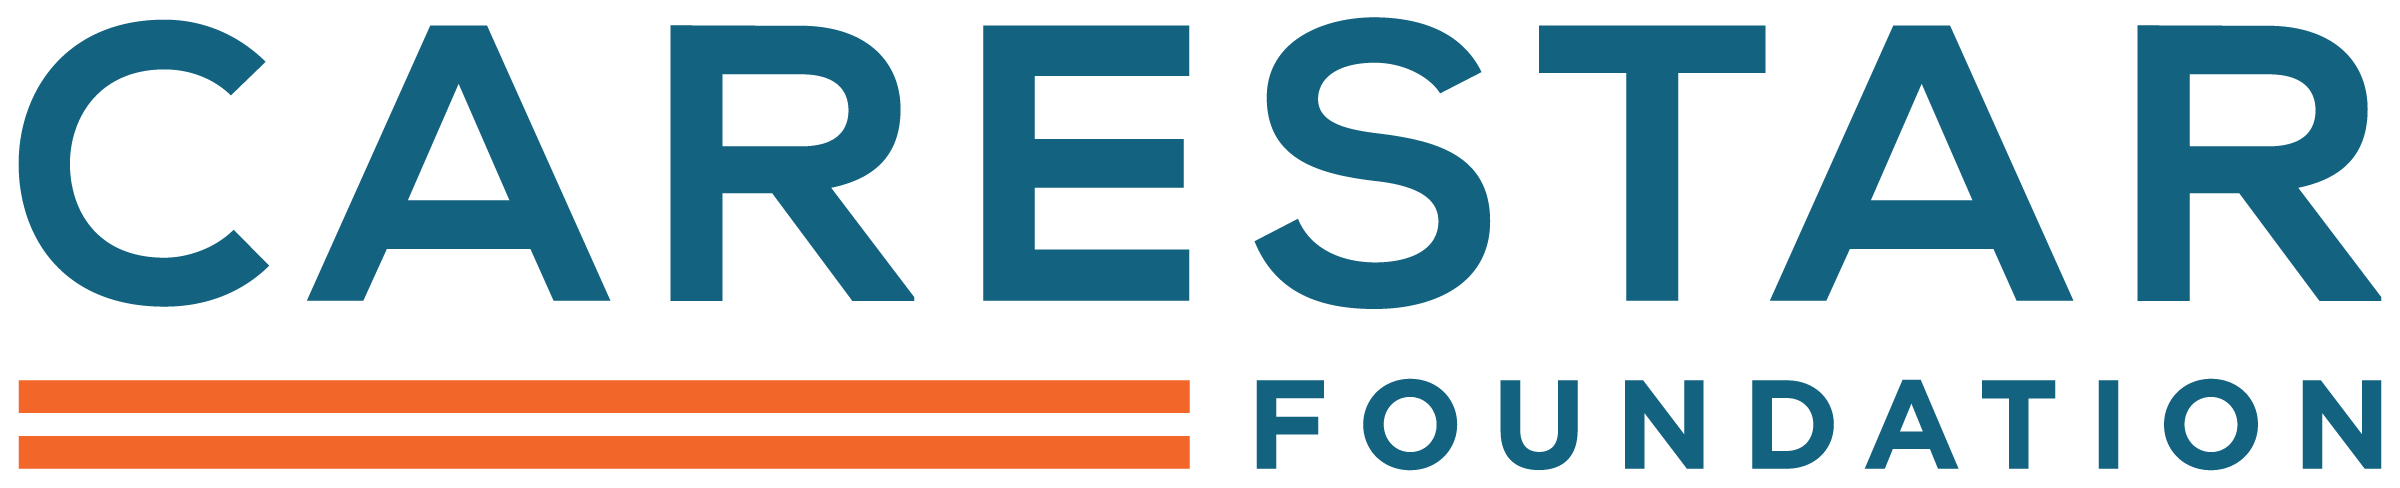 carestar-foundation-logo